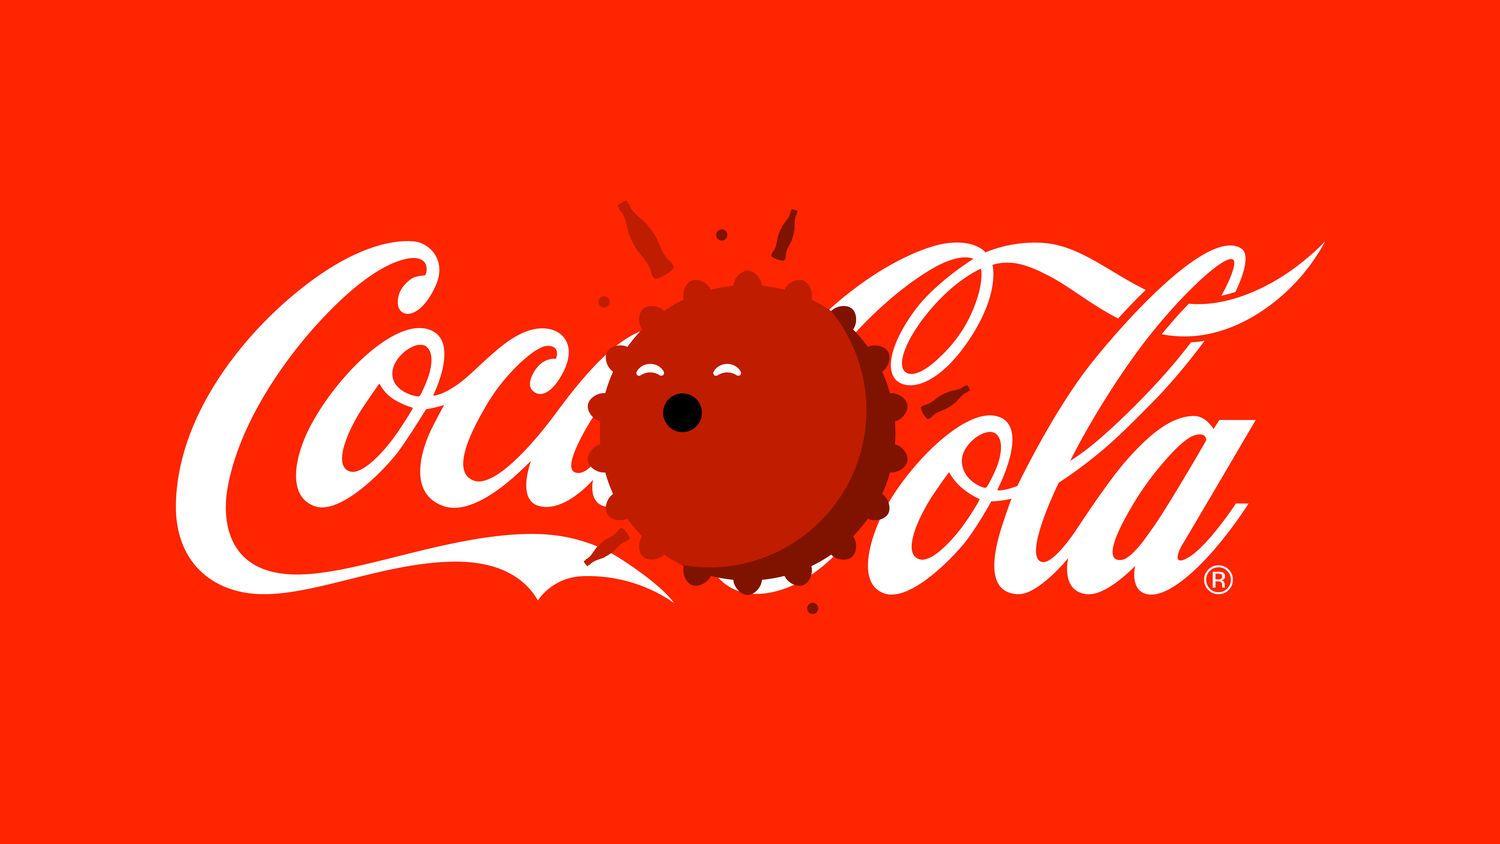 Phone Emoji Red Logo - Coca Cola Emojis